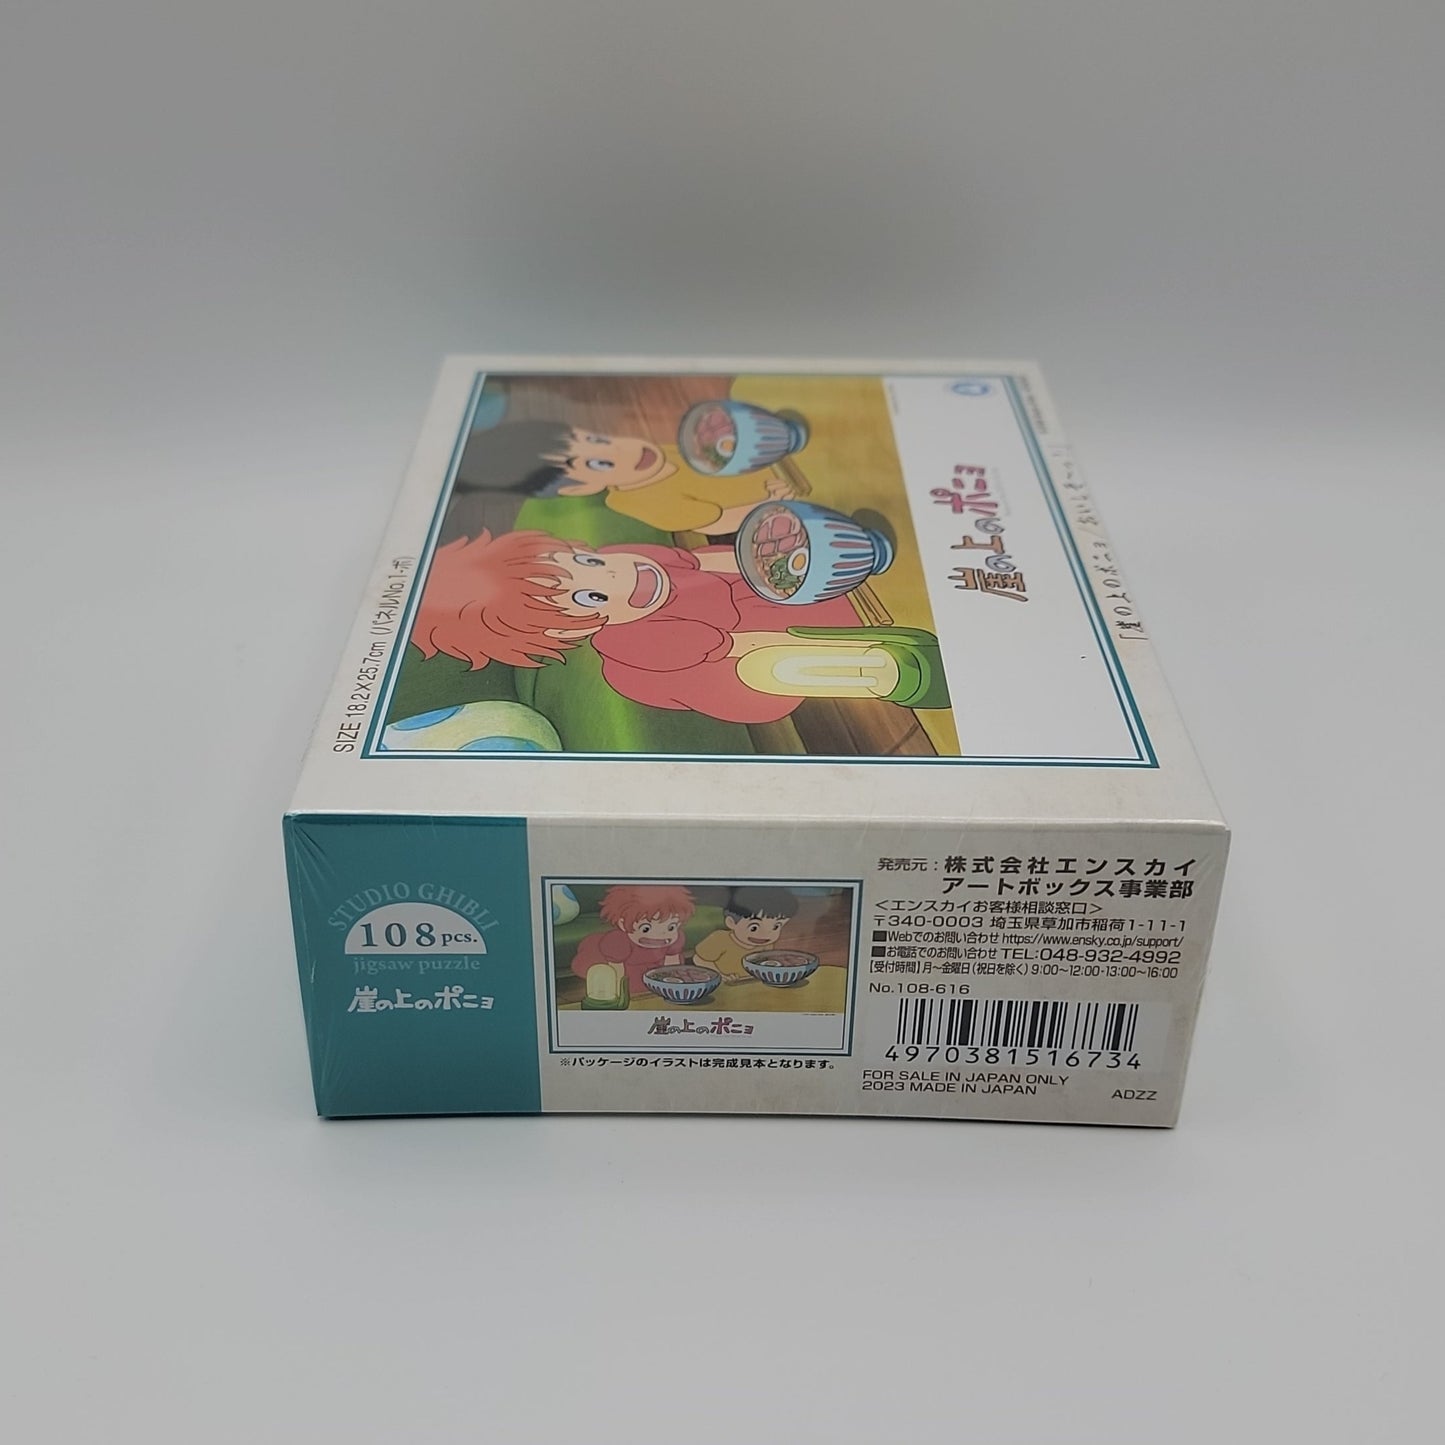 Ponyo Jigsaw Puzzle (108PCS)